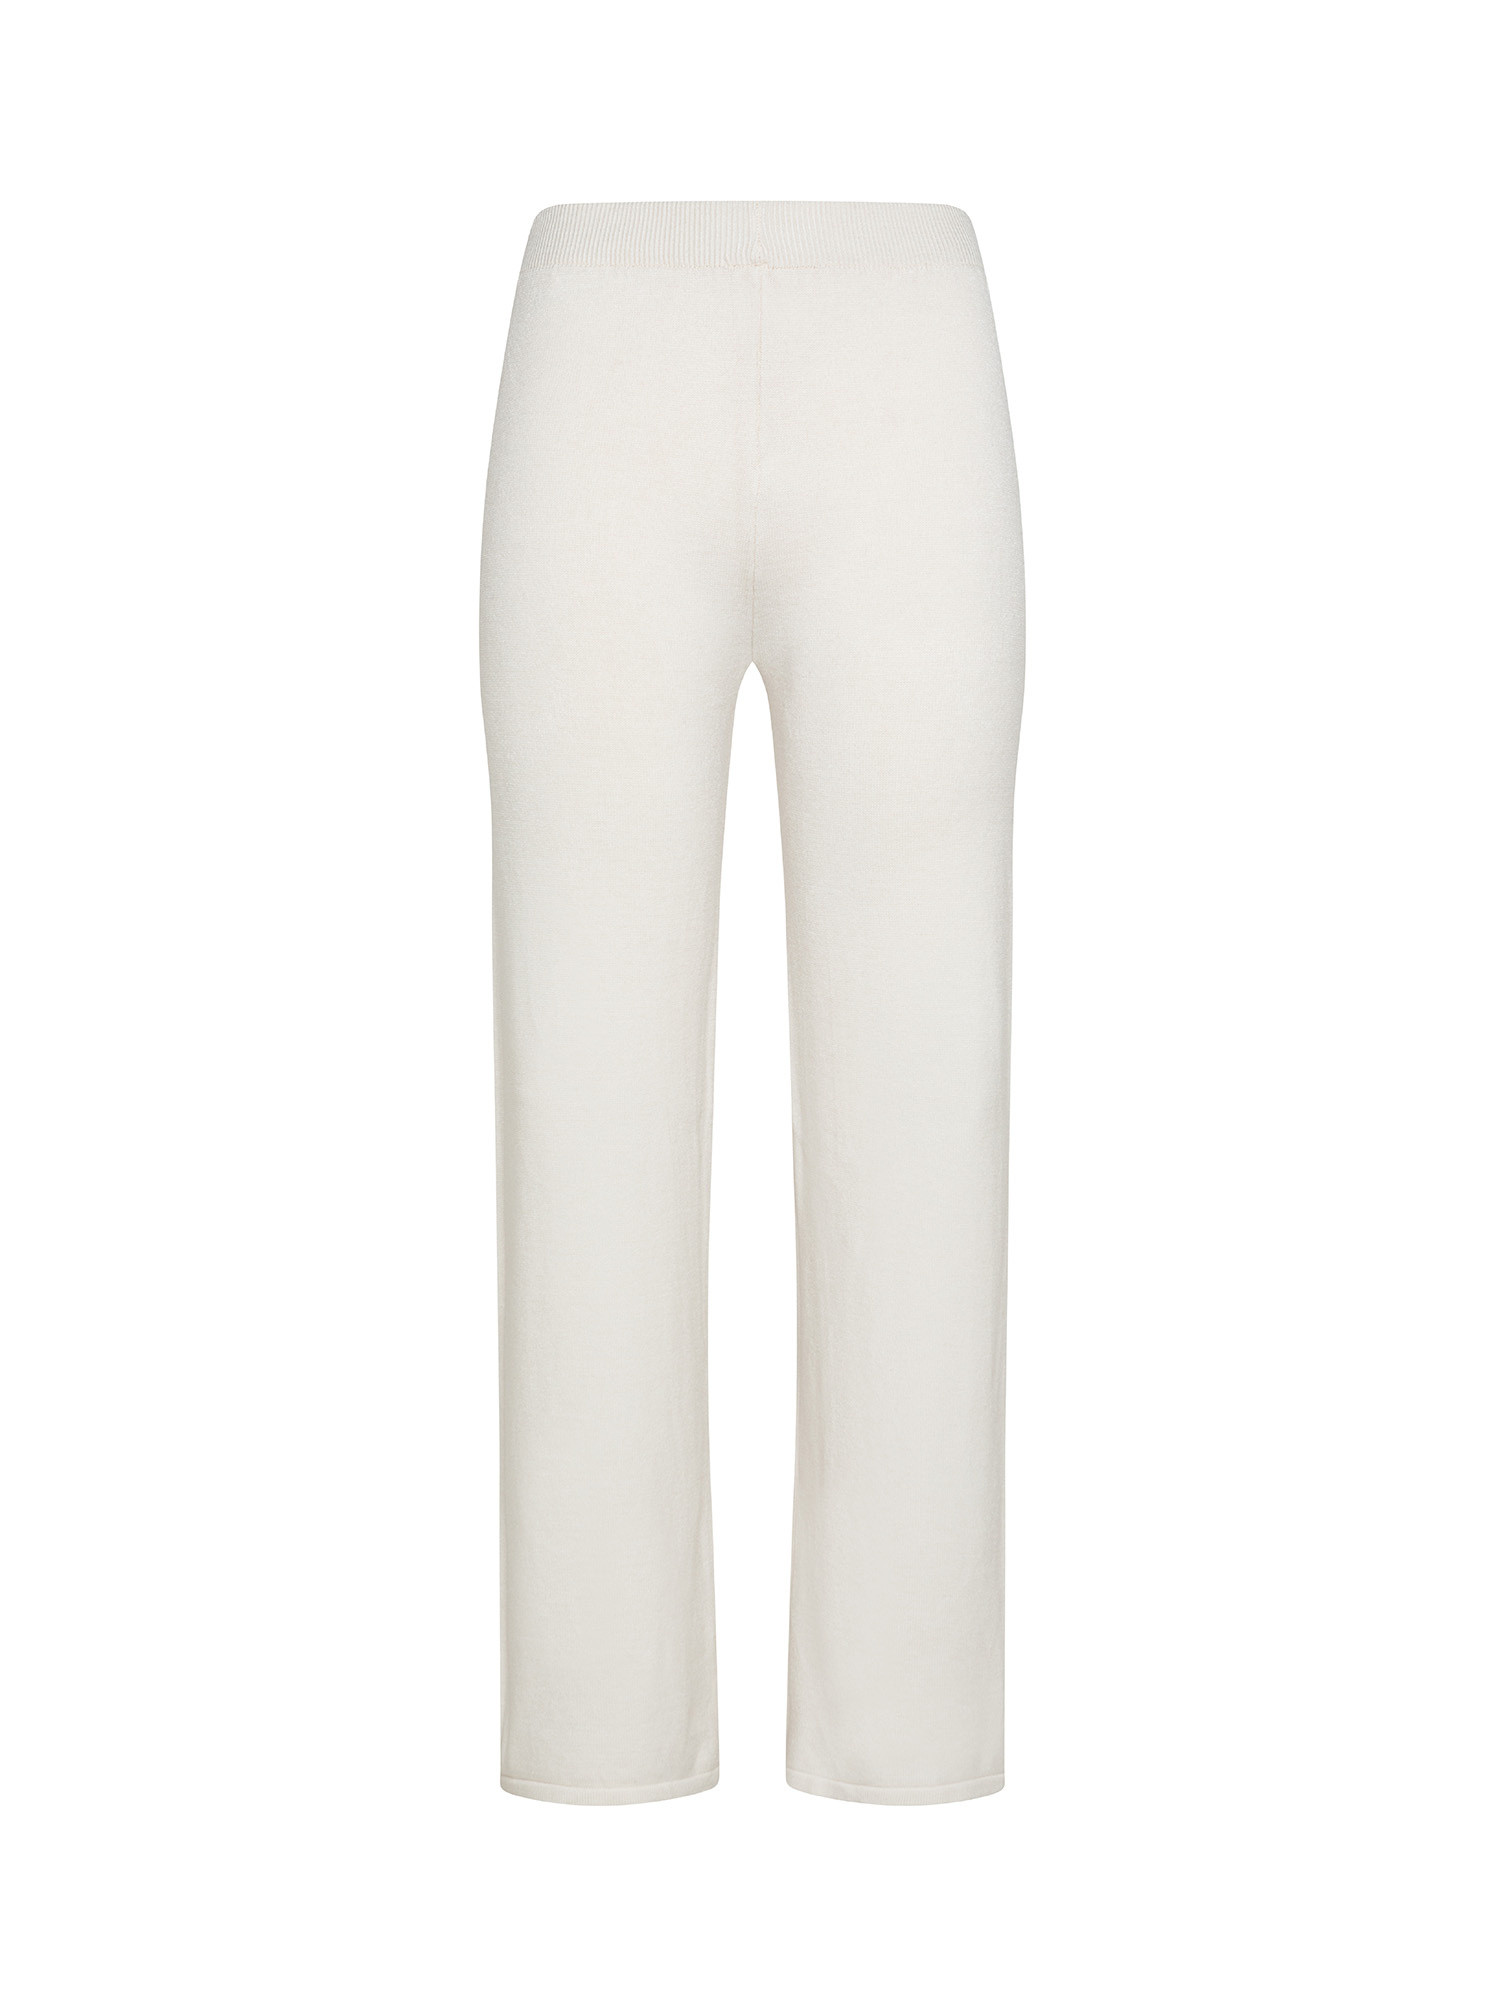 K Collection - Pantalone, Bianco panna, large image number 0